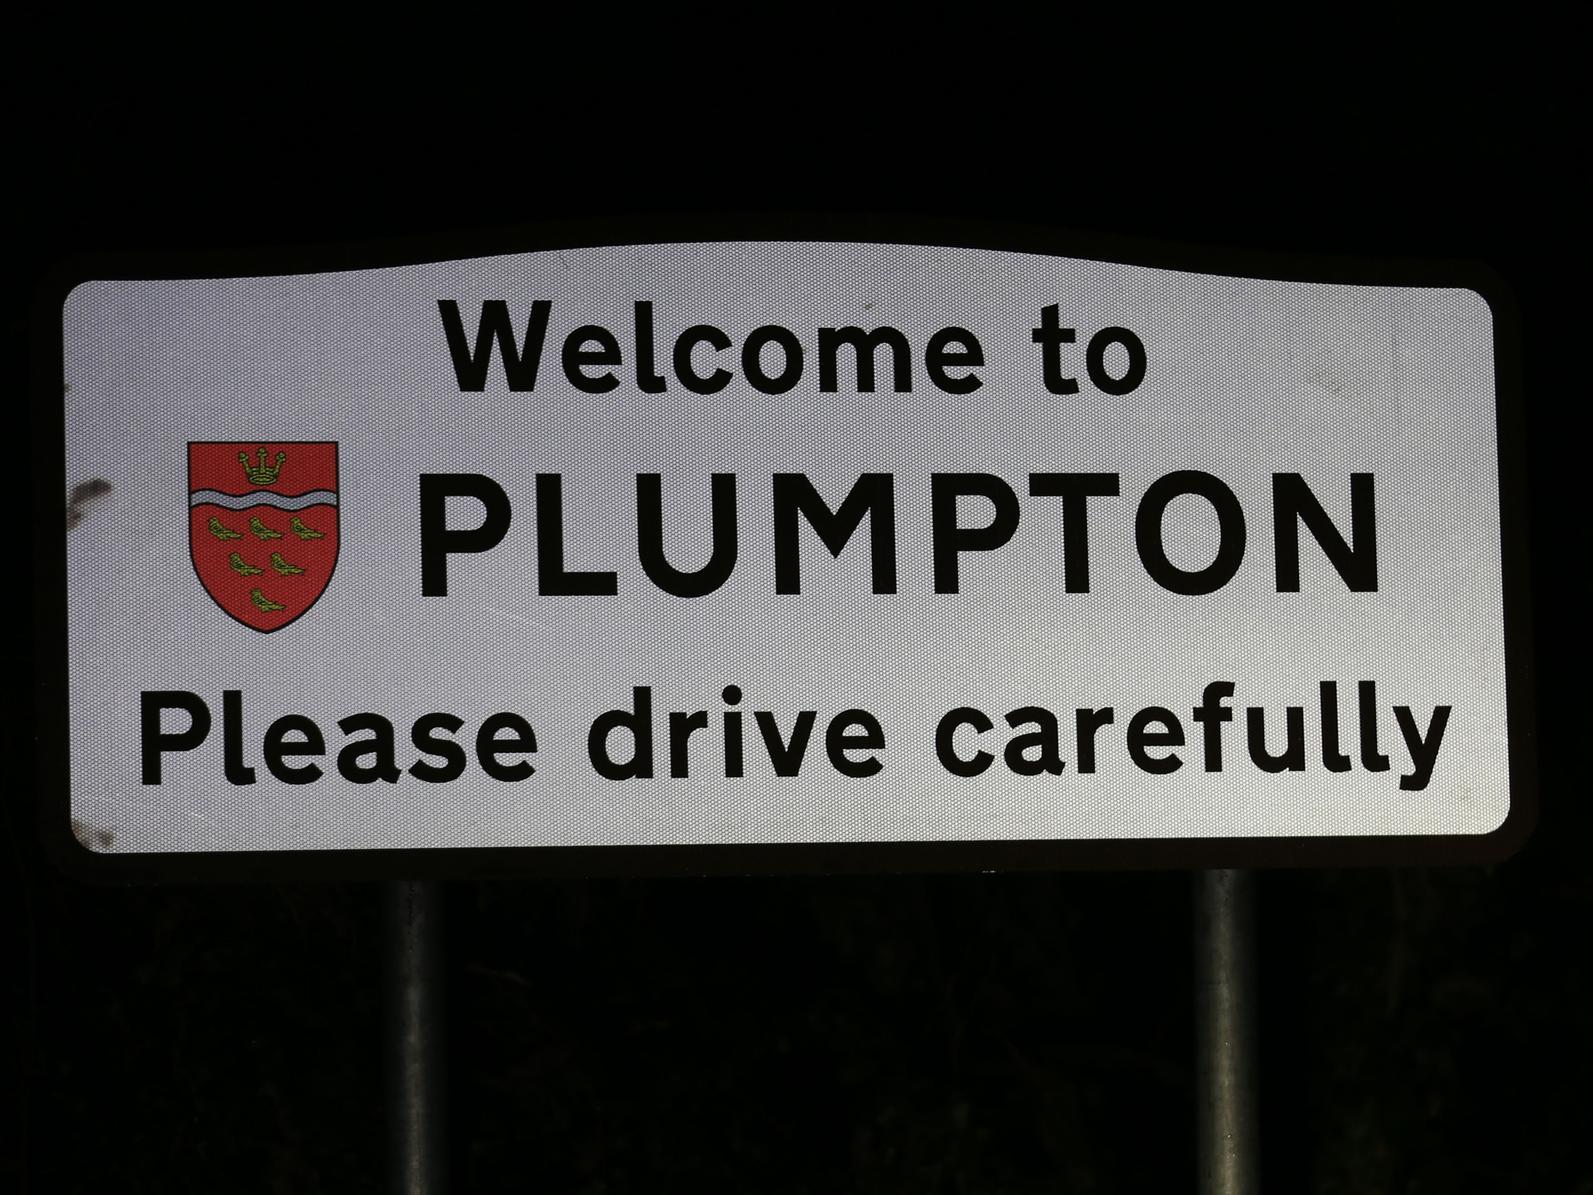 The Plumpton village sign